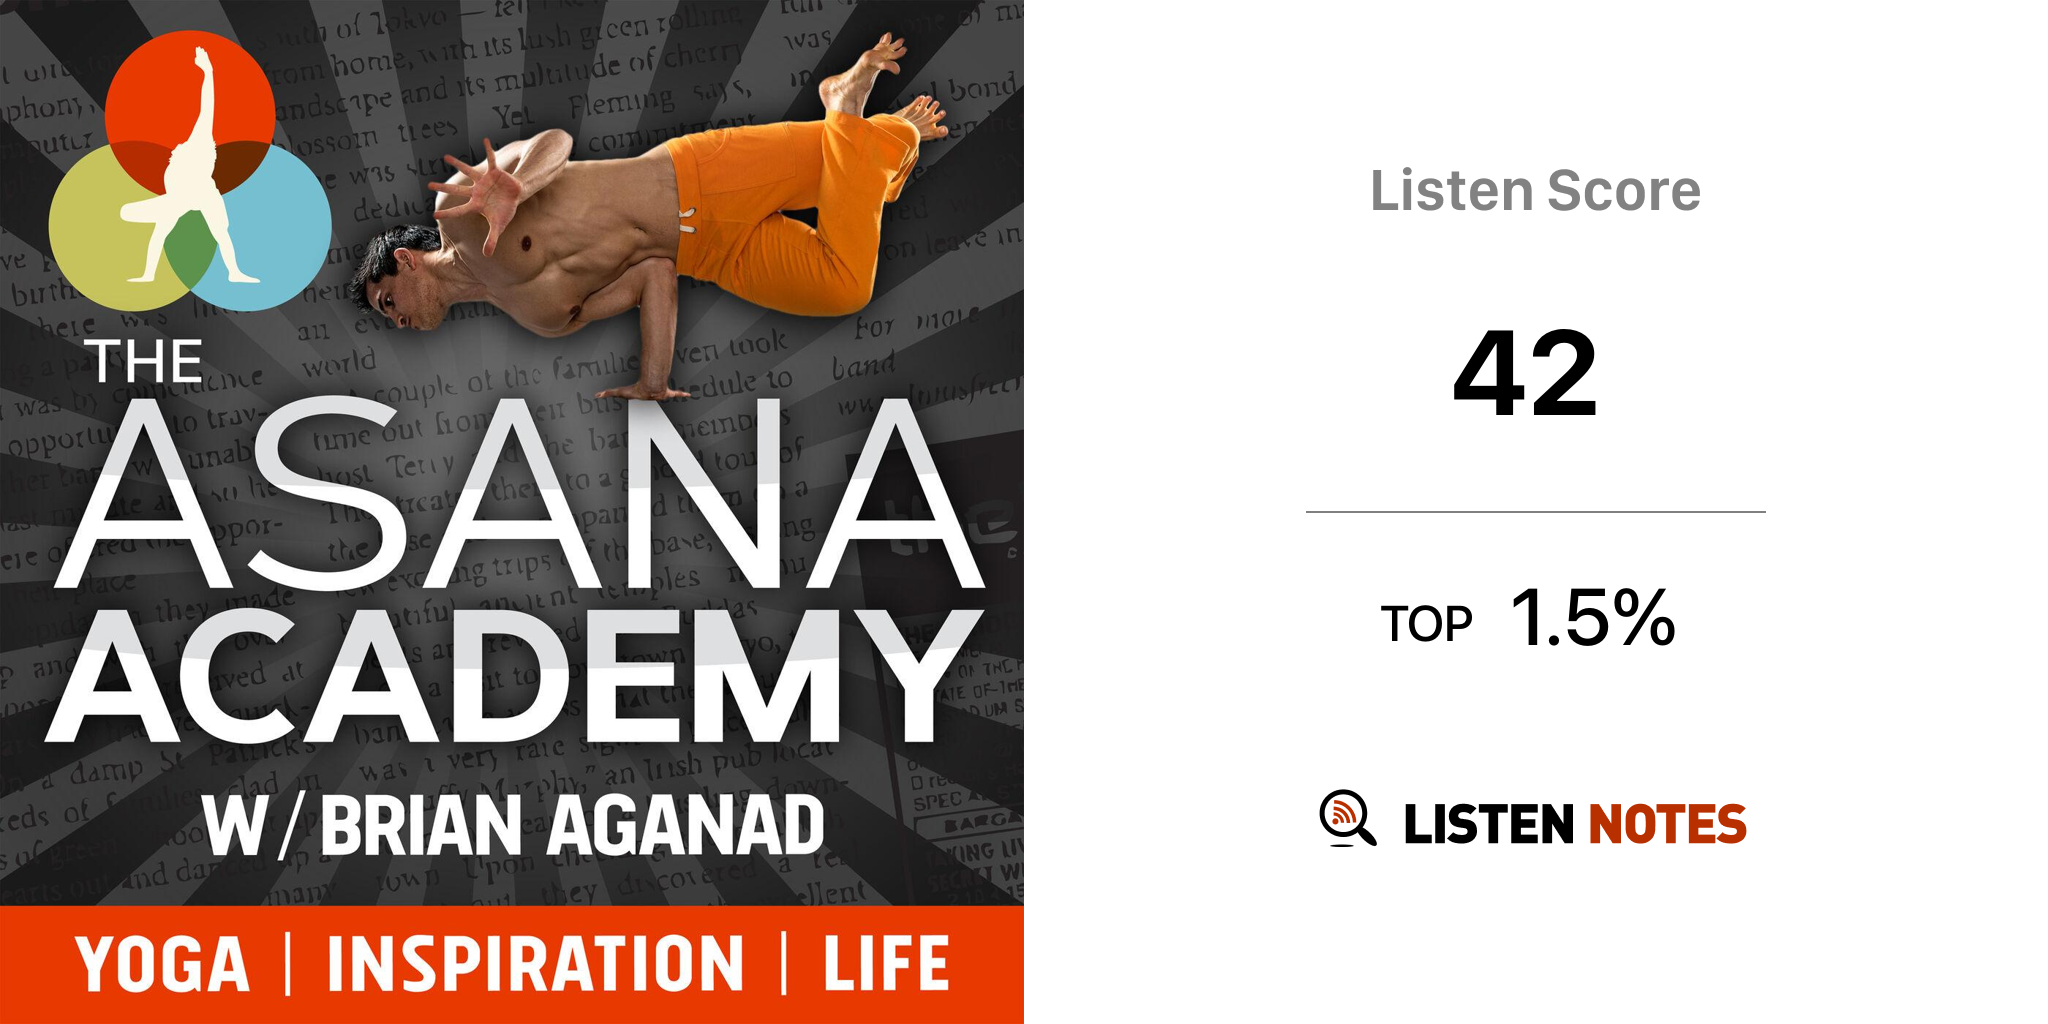 Asana Academy